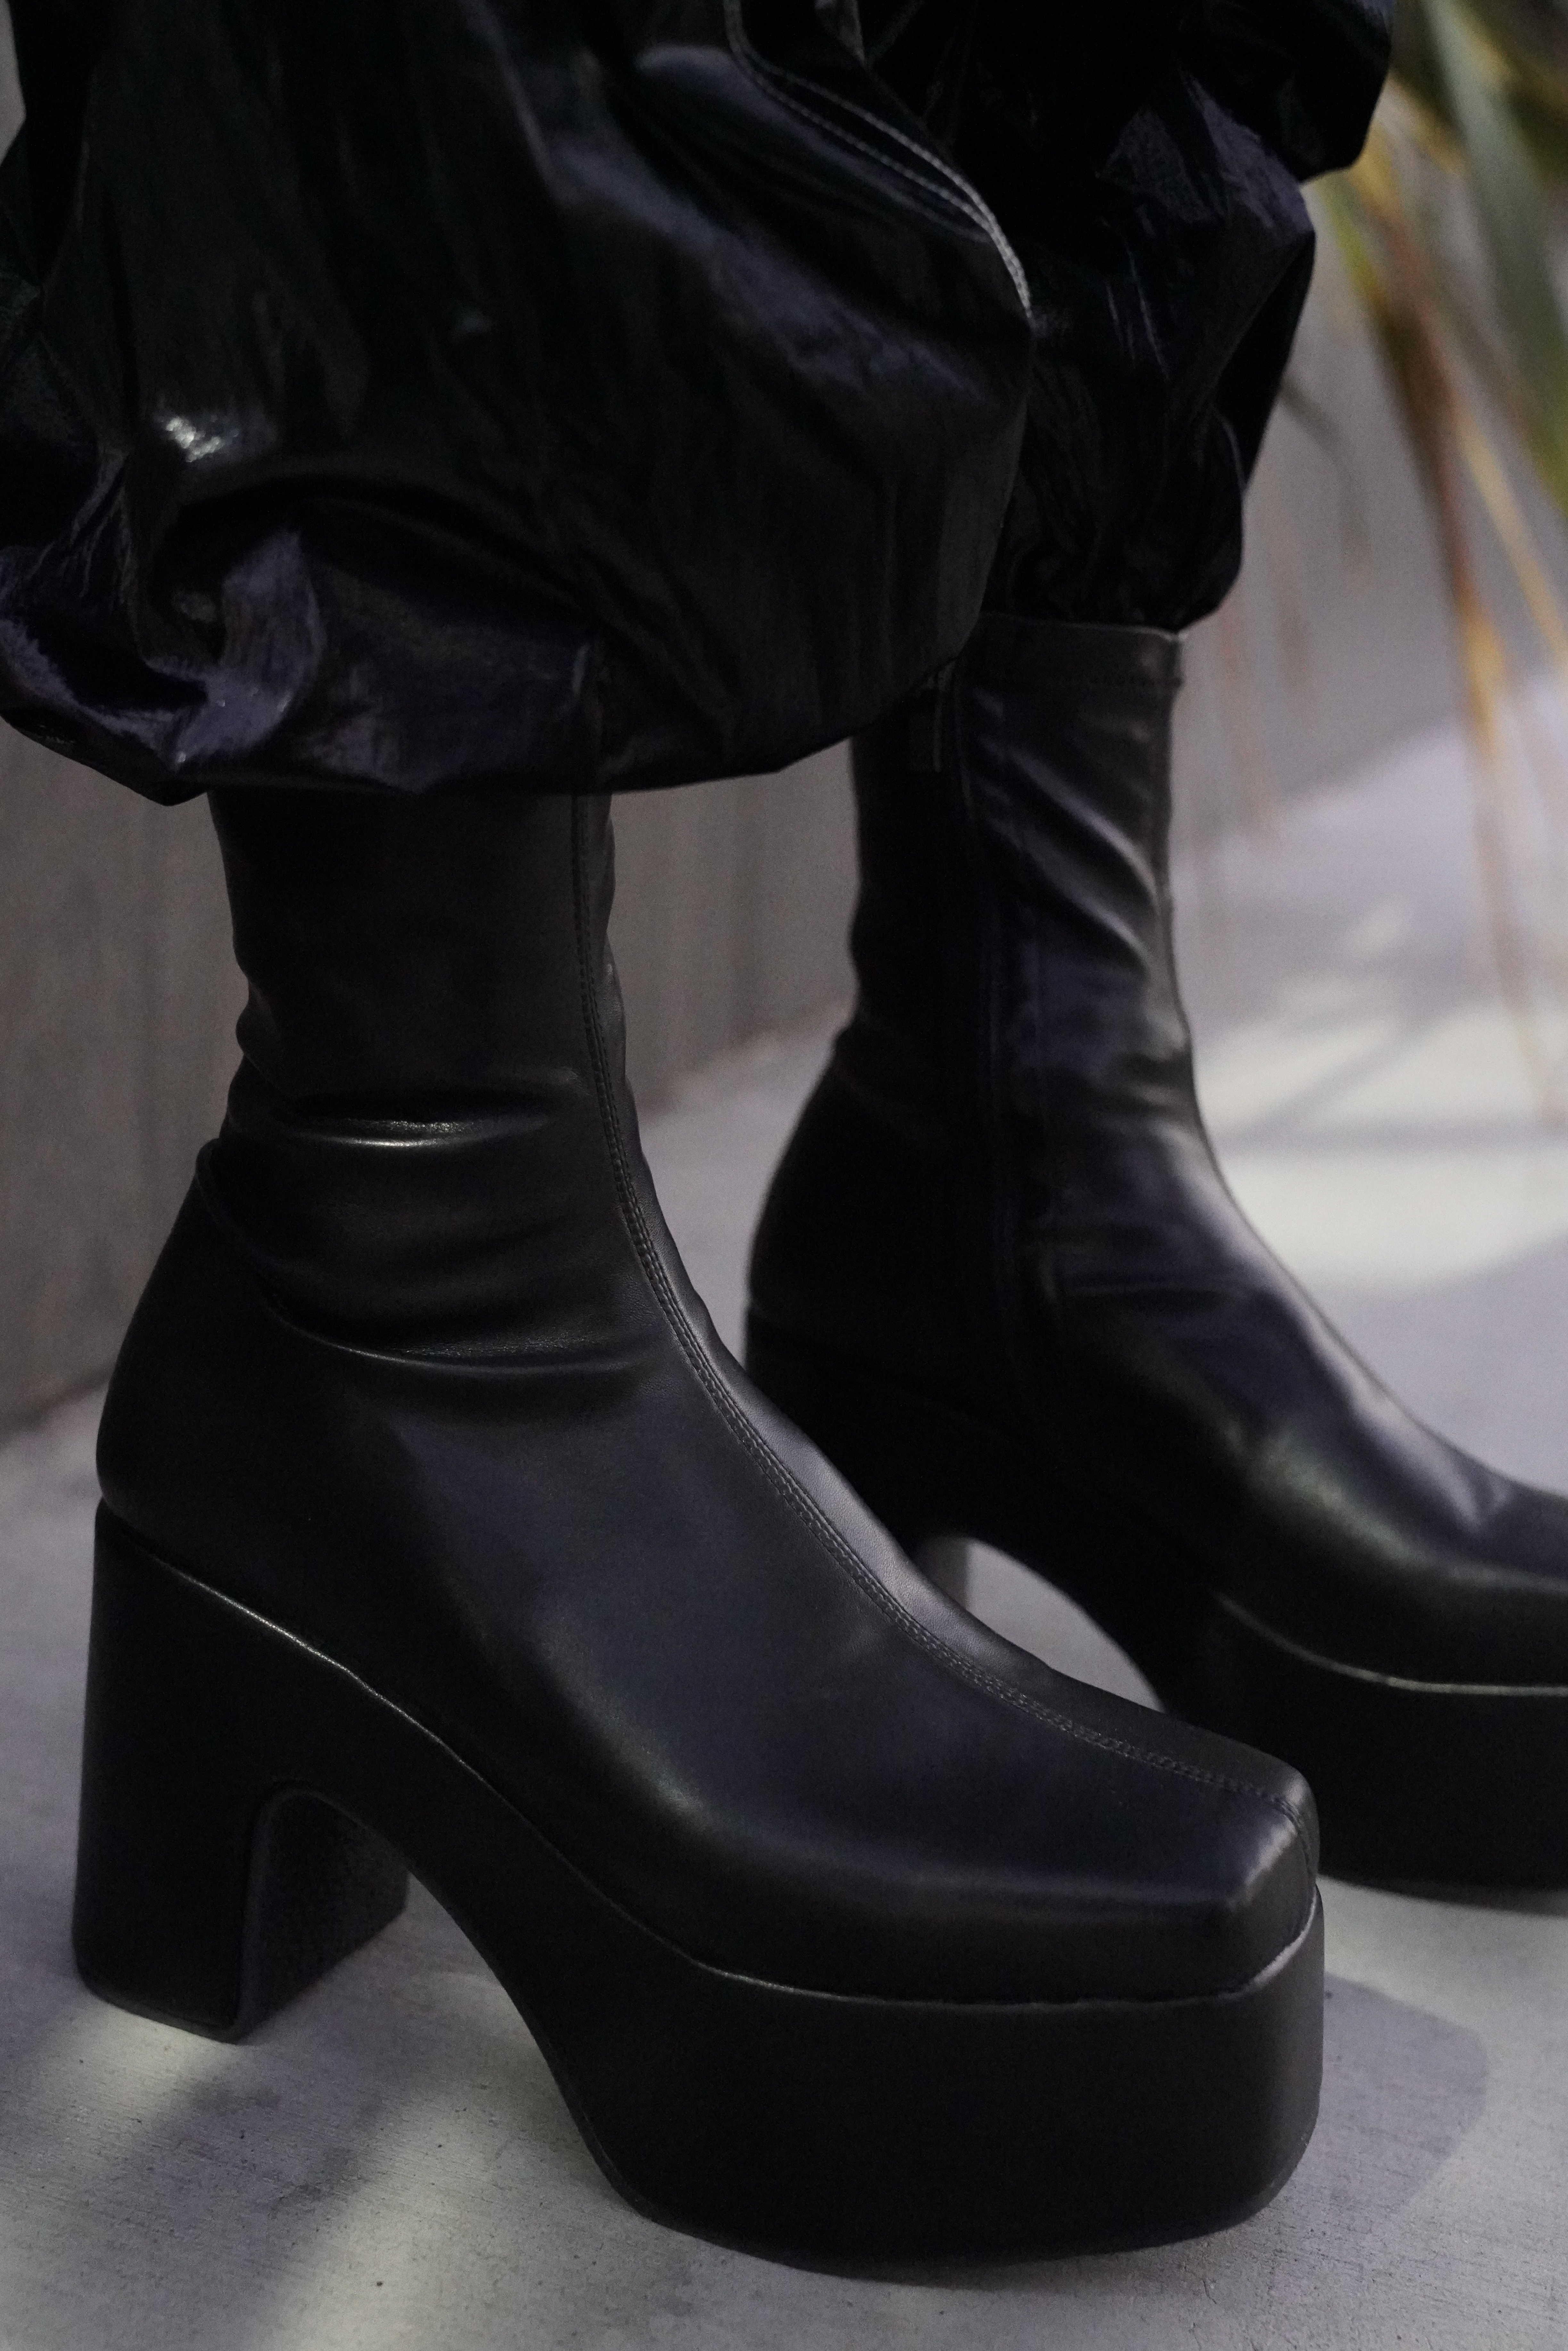 Ankle boots(ブーツ) | SISS SENSEのファッション通販 - PATRA MARKET